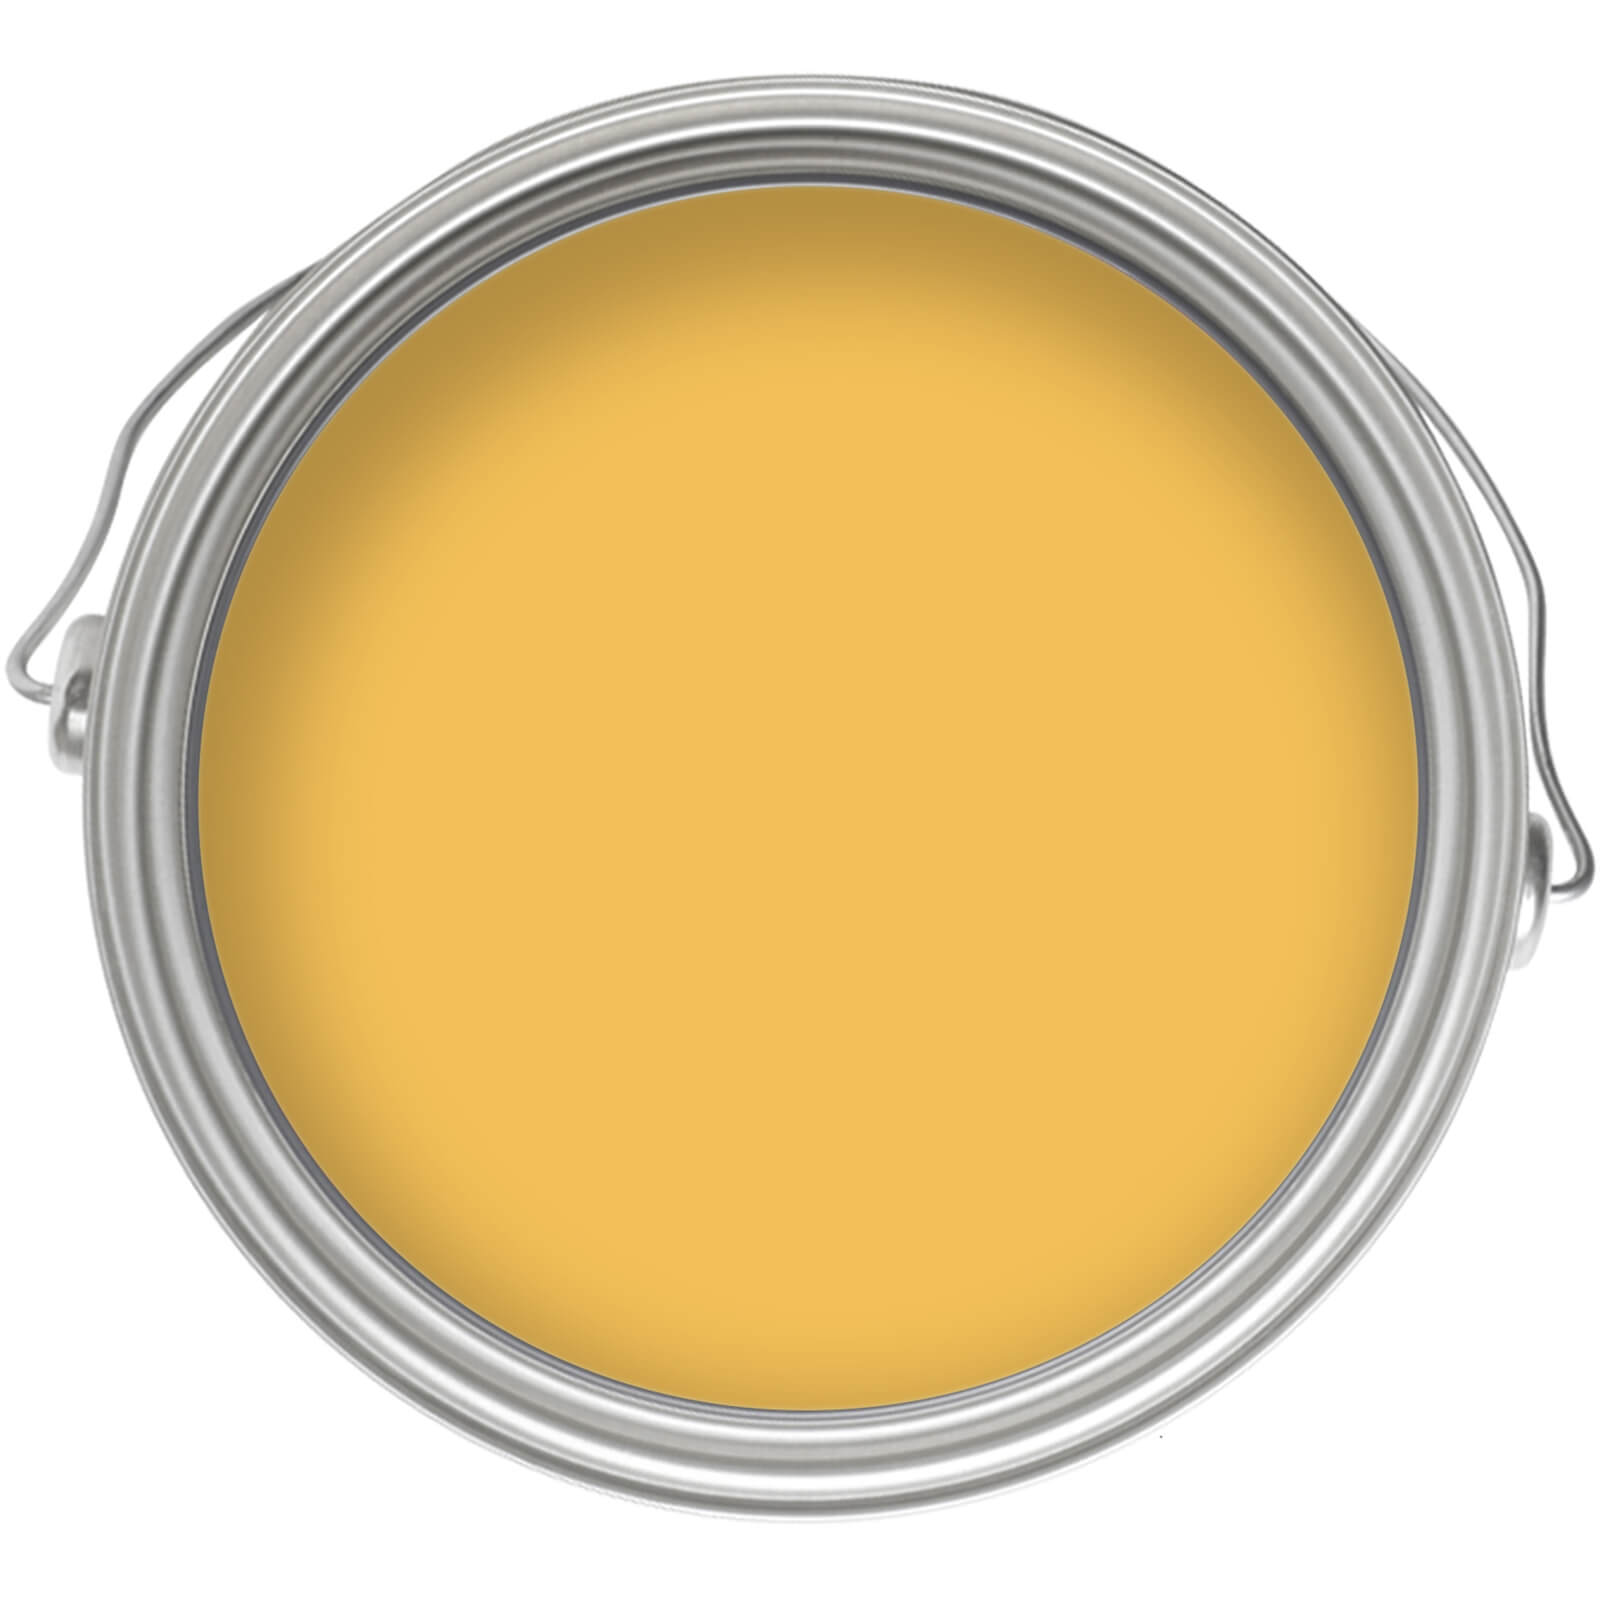 Homebase Matt Emulsion Paint Yellow Brick Road - 2.5L